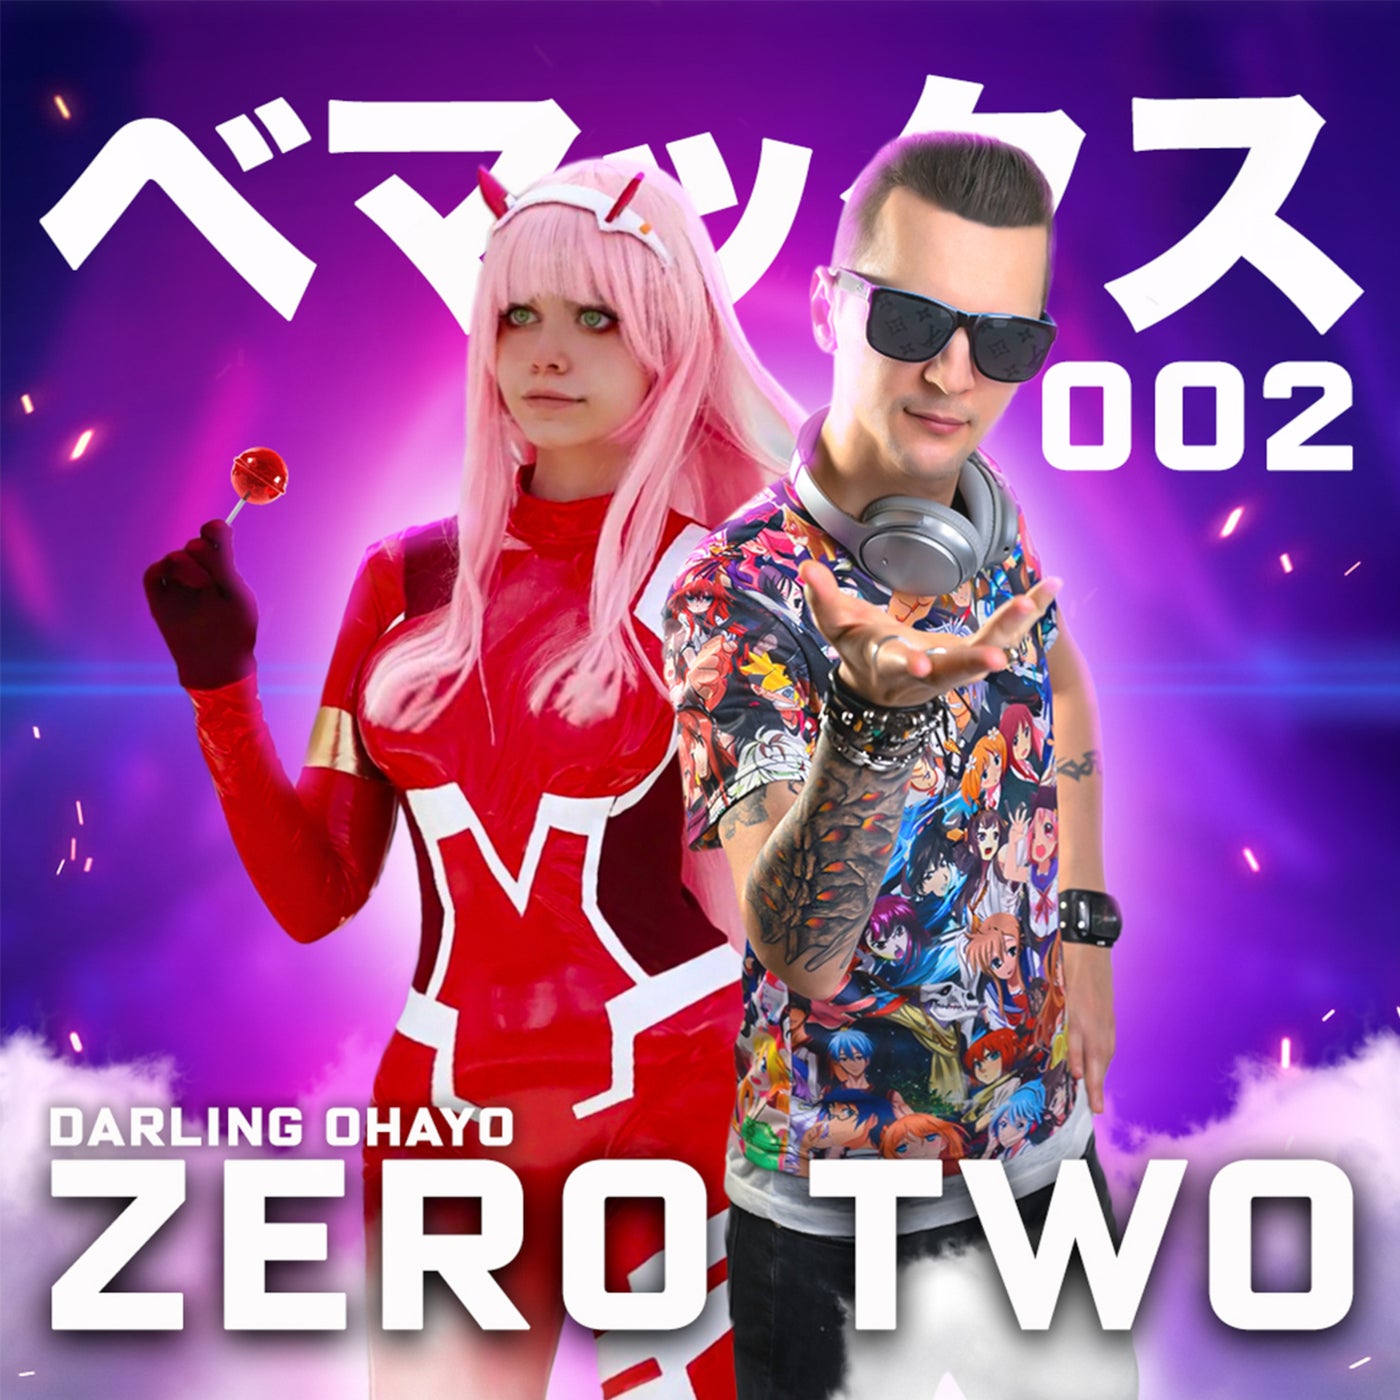 Darling ohayo! : r/ZeroTwo